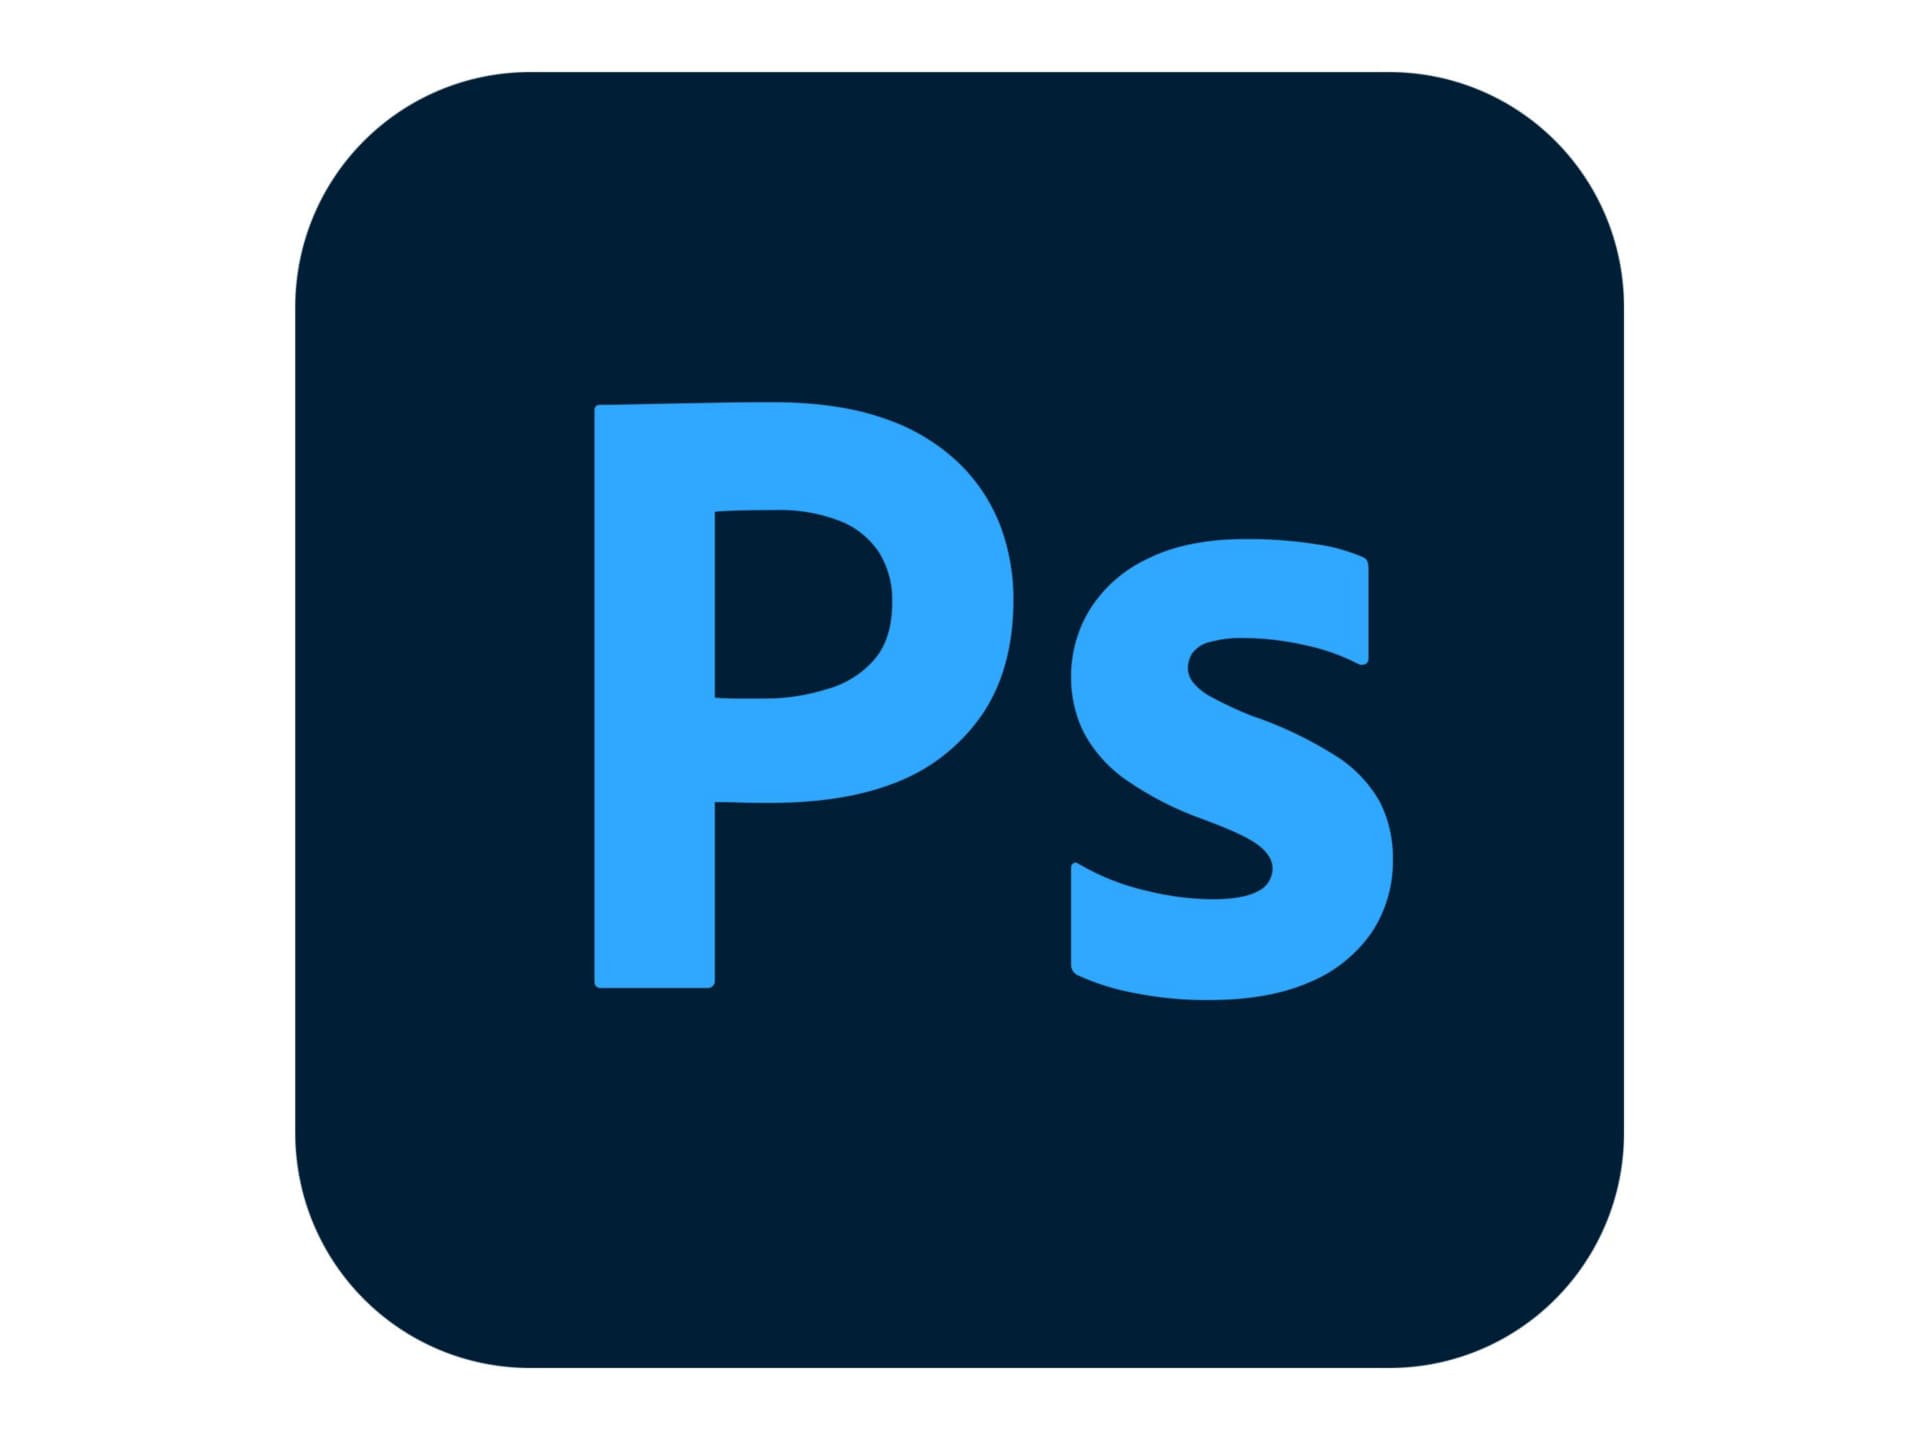 Adobe Photoshop CC for Enterprise - Subscription Renewal - 1 user